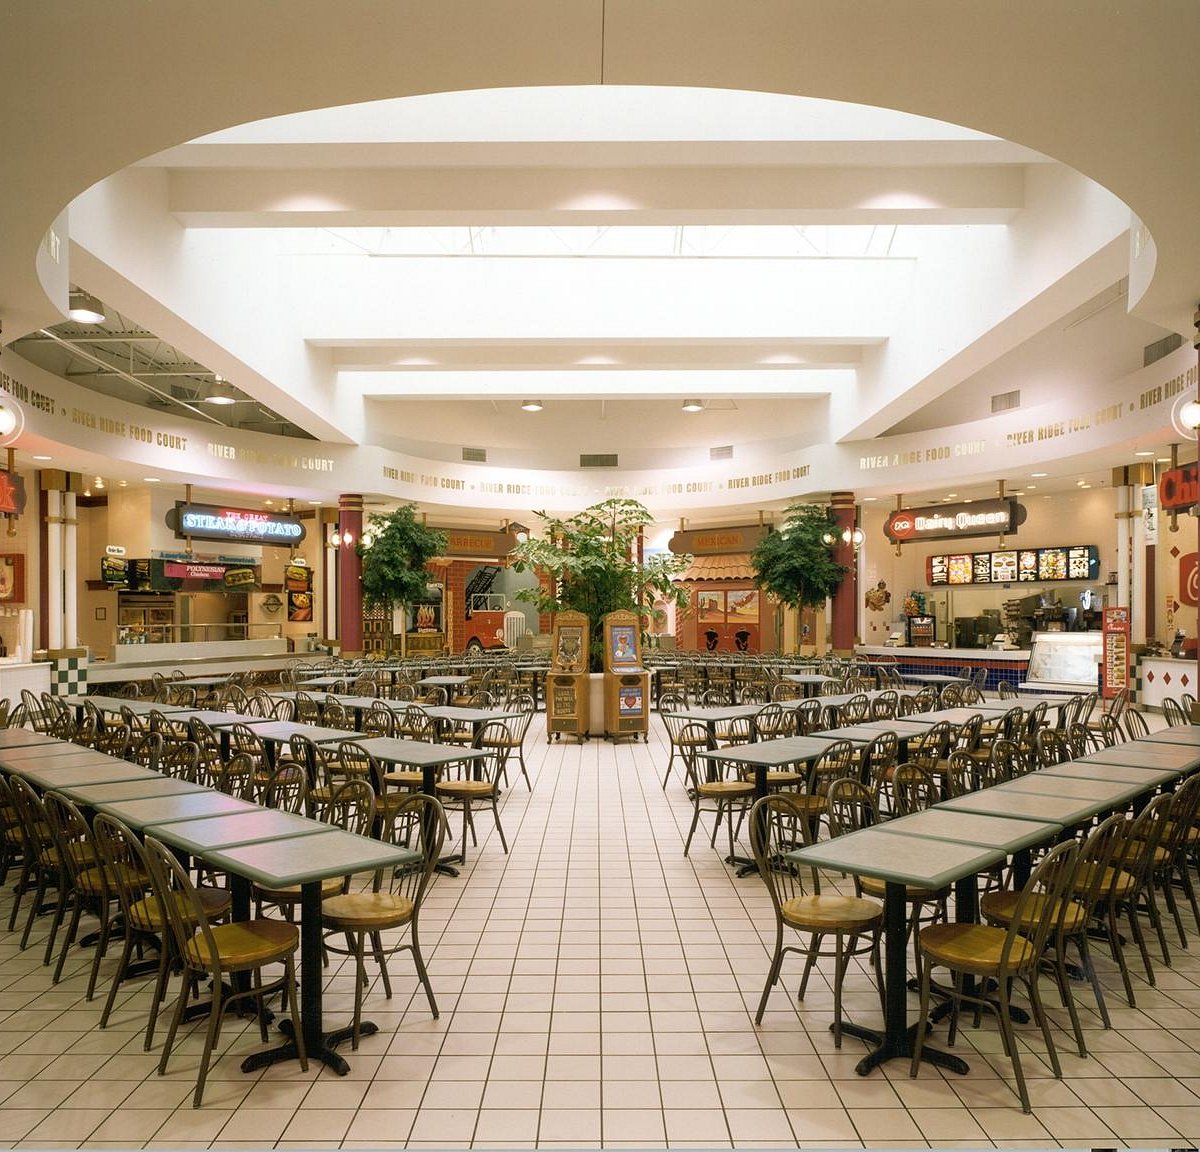 The original mall - Reviews, Photos - Riverside Mall - Tripadvisor